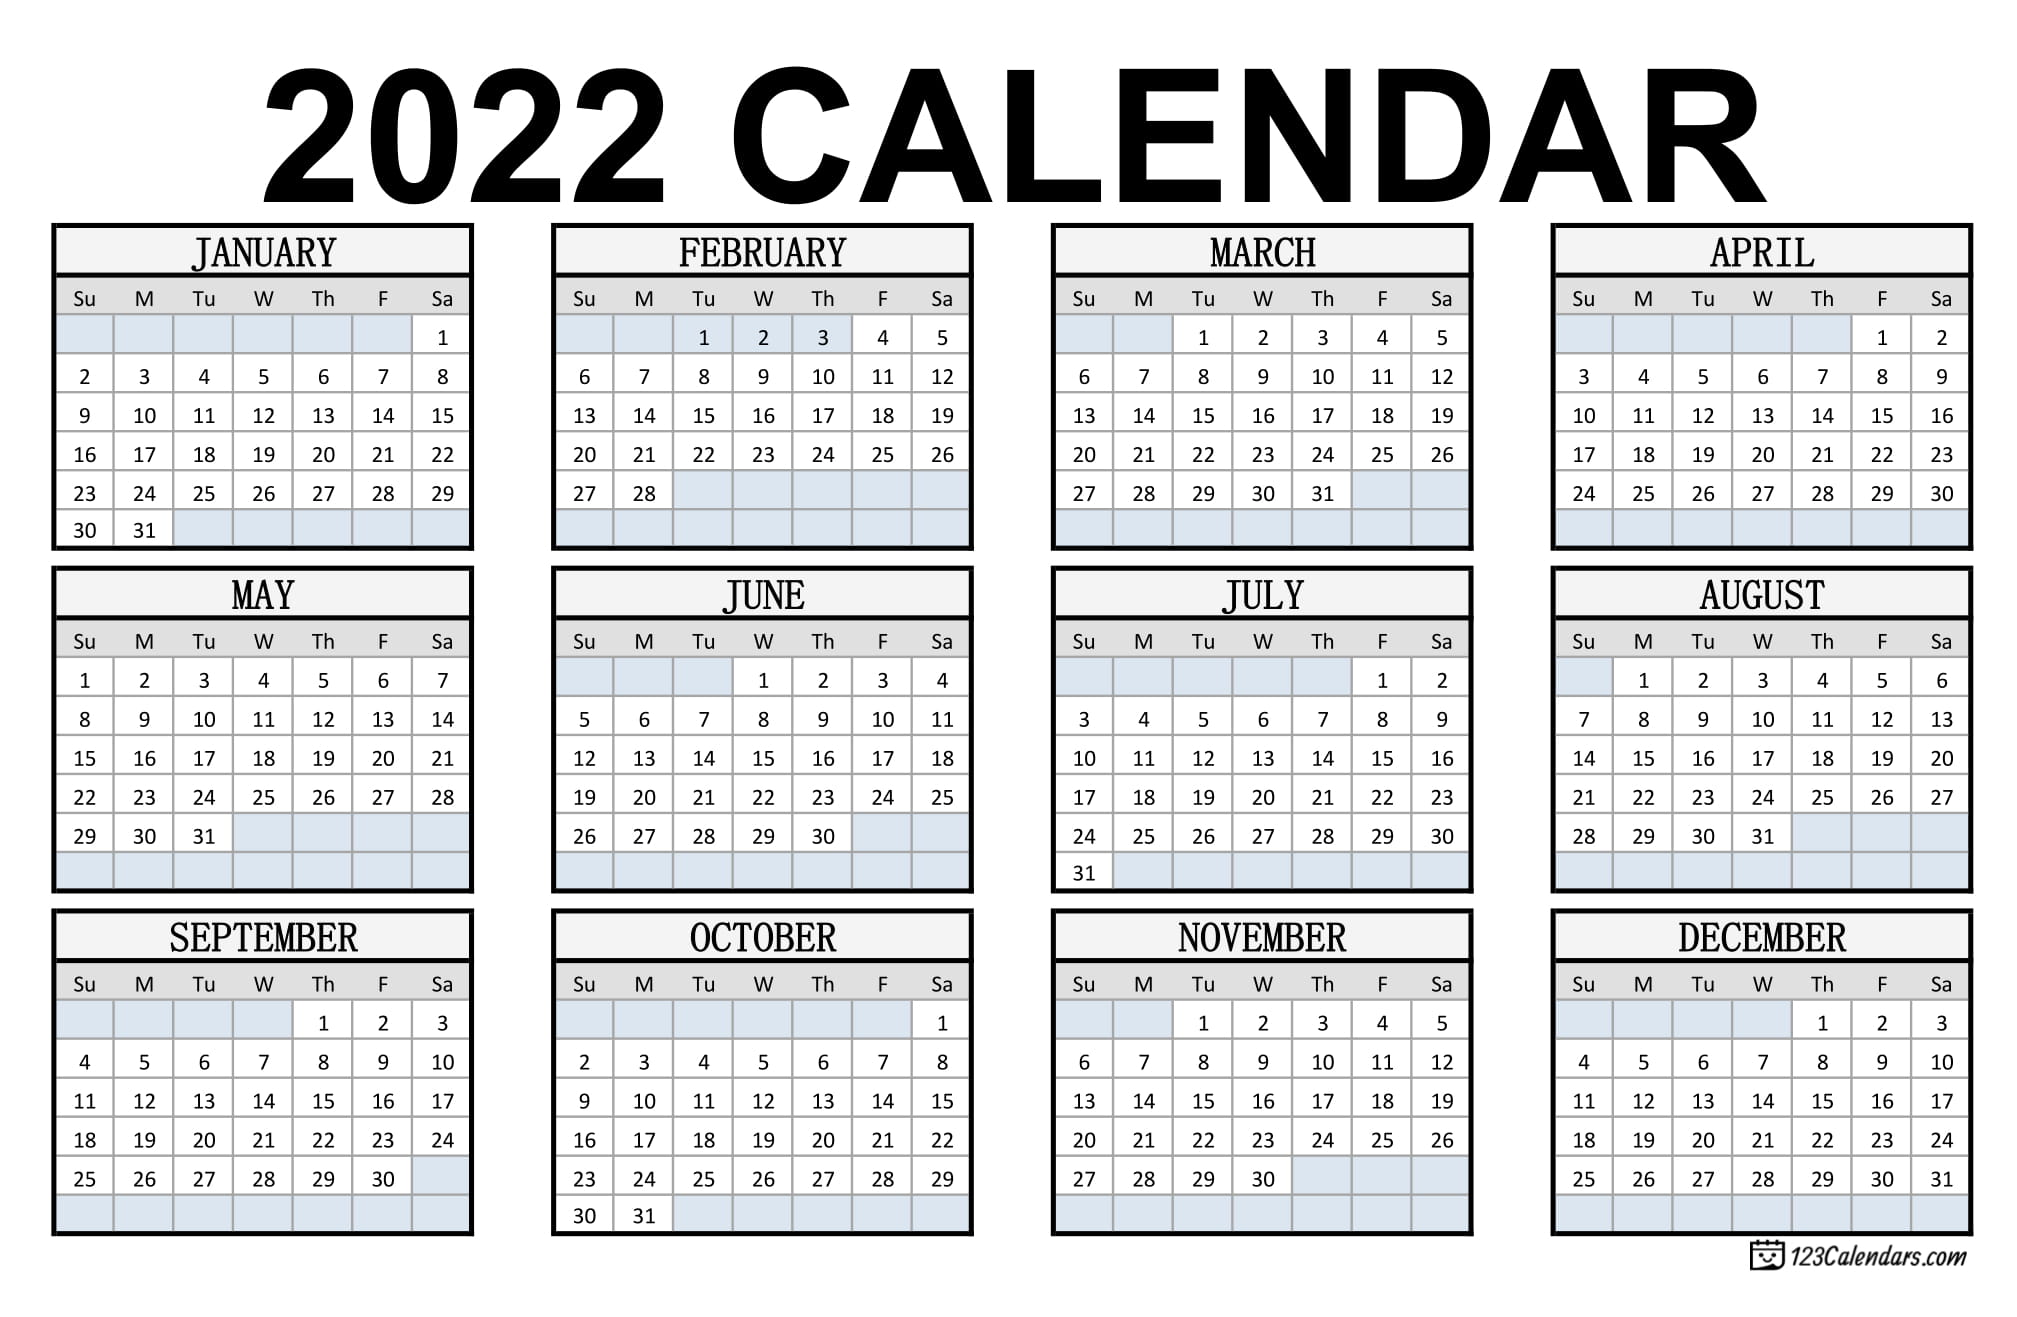 Print 2022 Calendar One Page Year 2022 Calendar Templates | 123Calendars.com